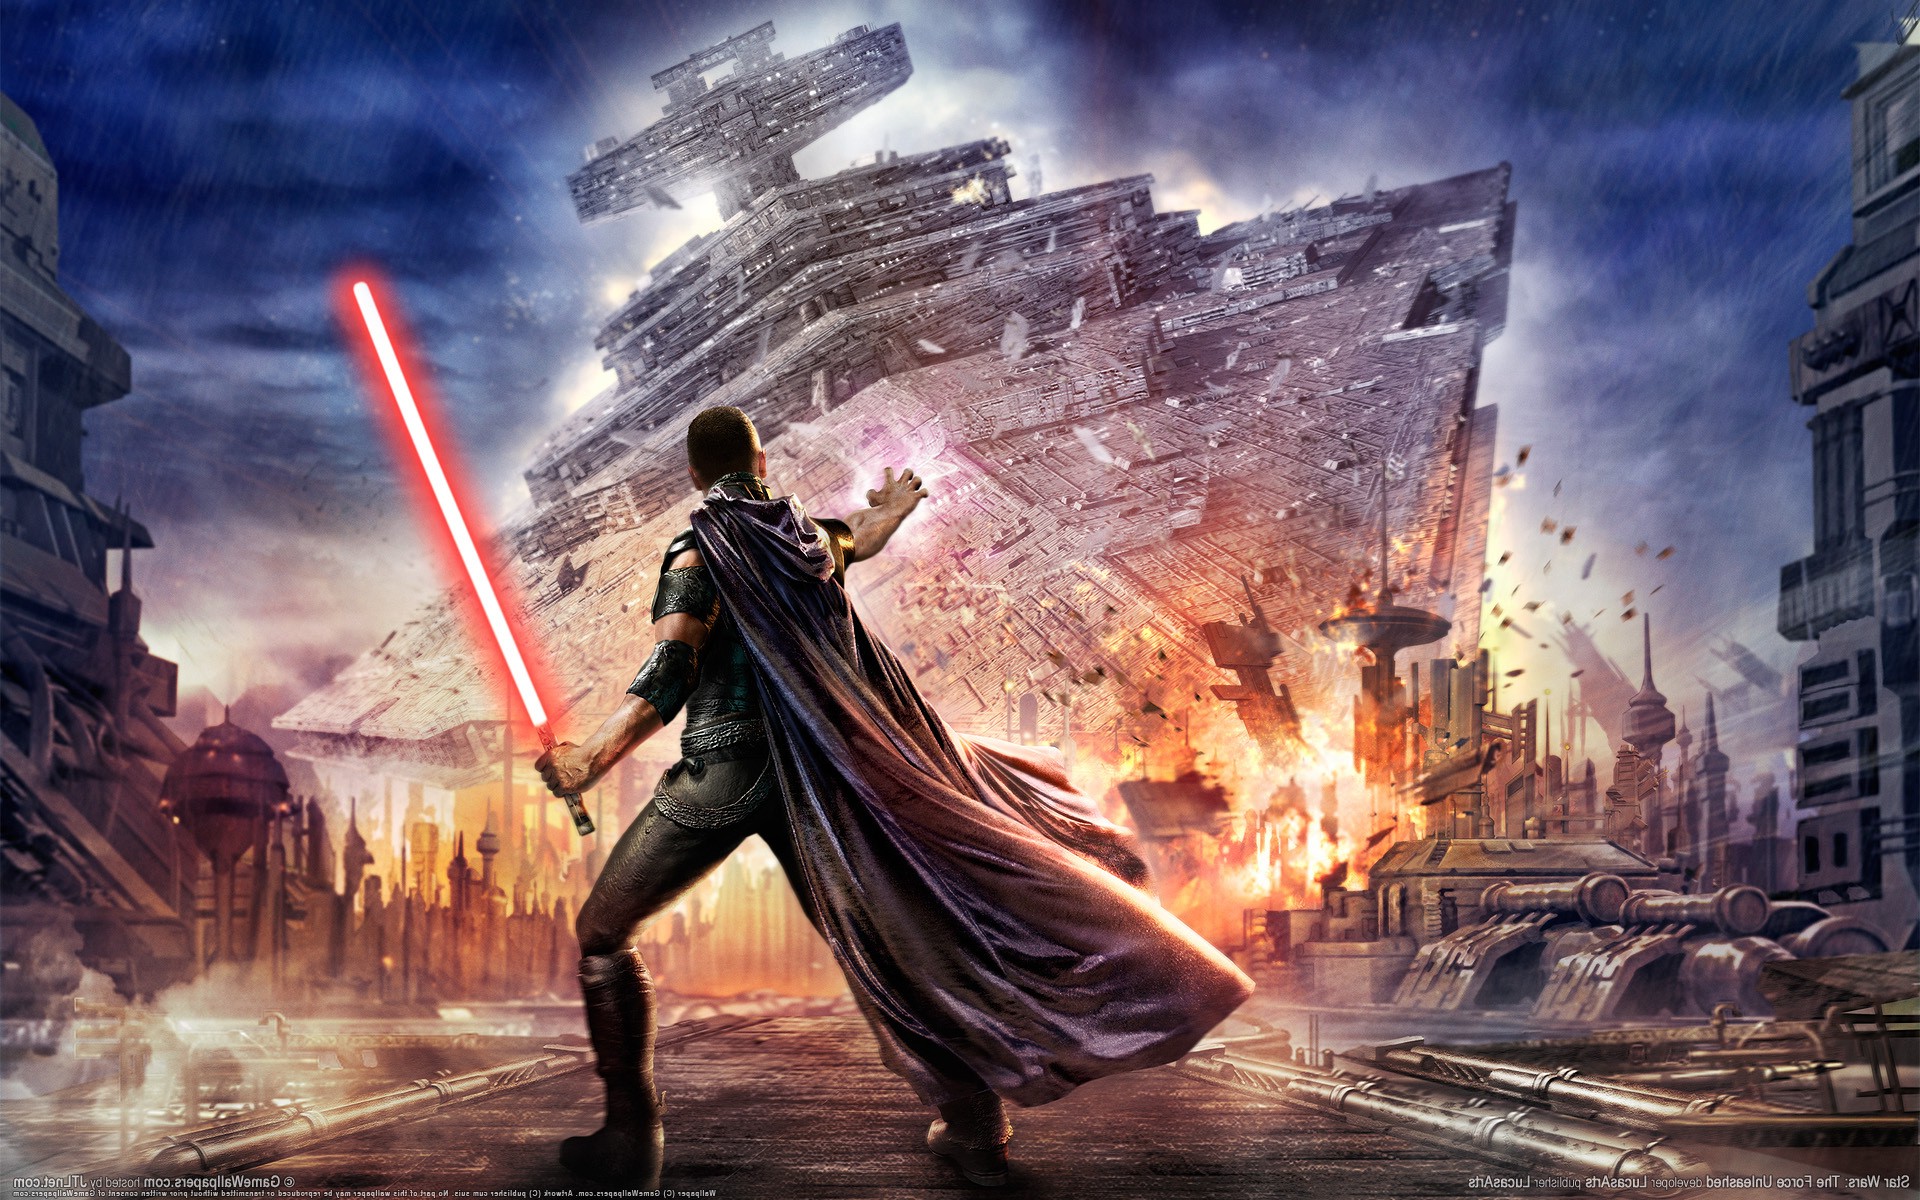 star wars battlefront 2 free pc download